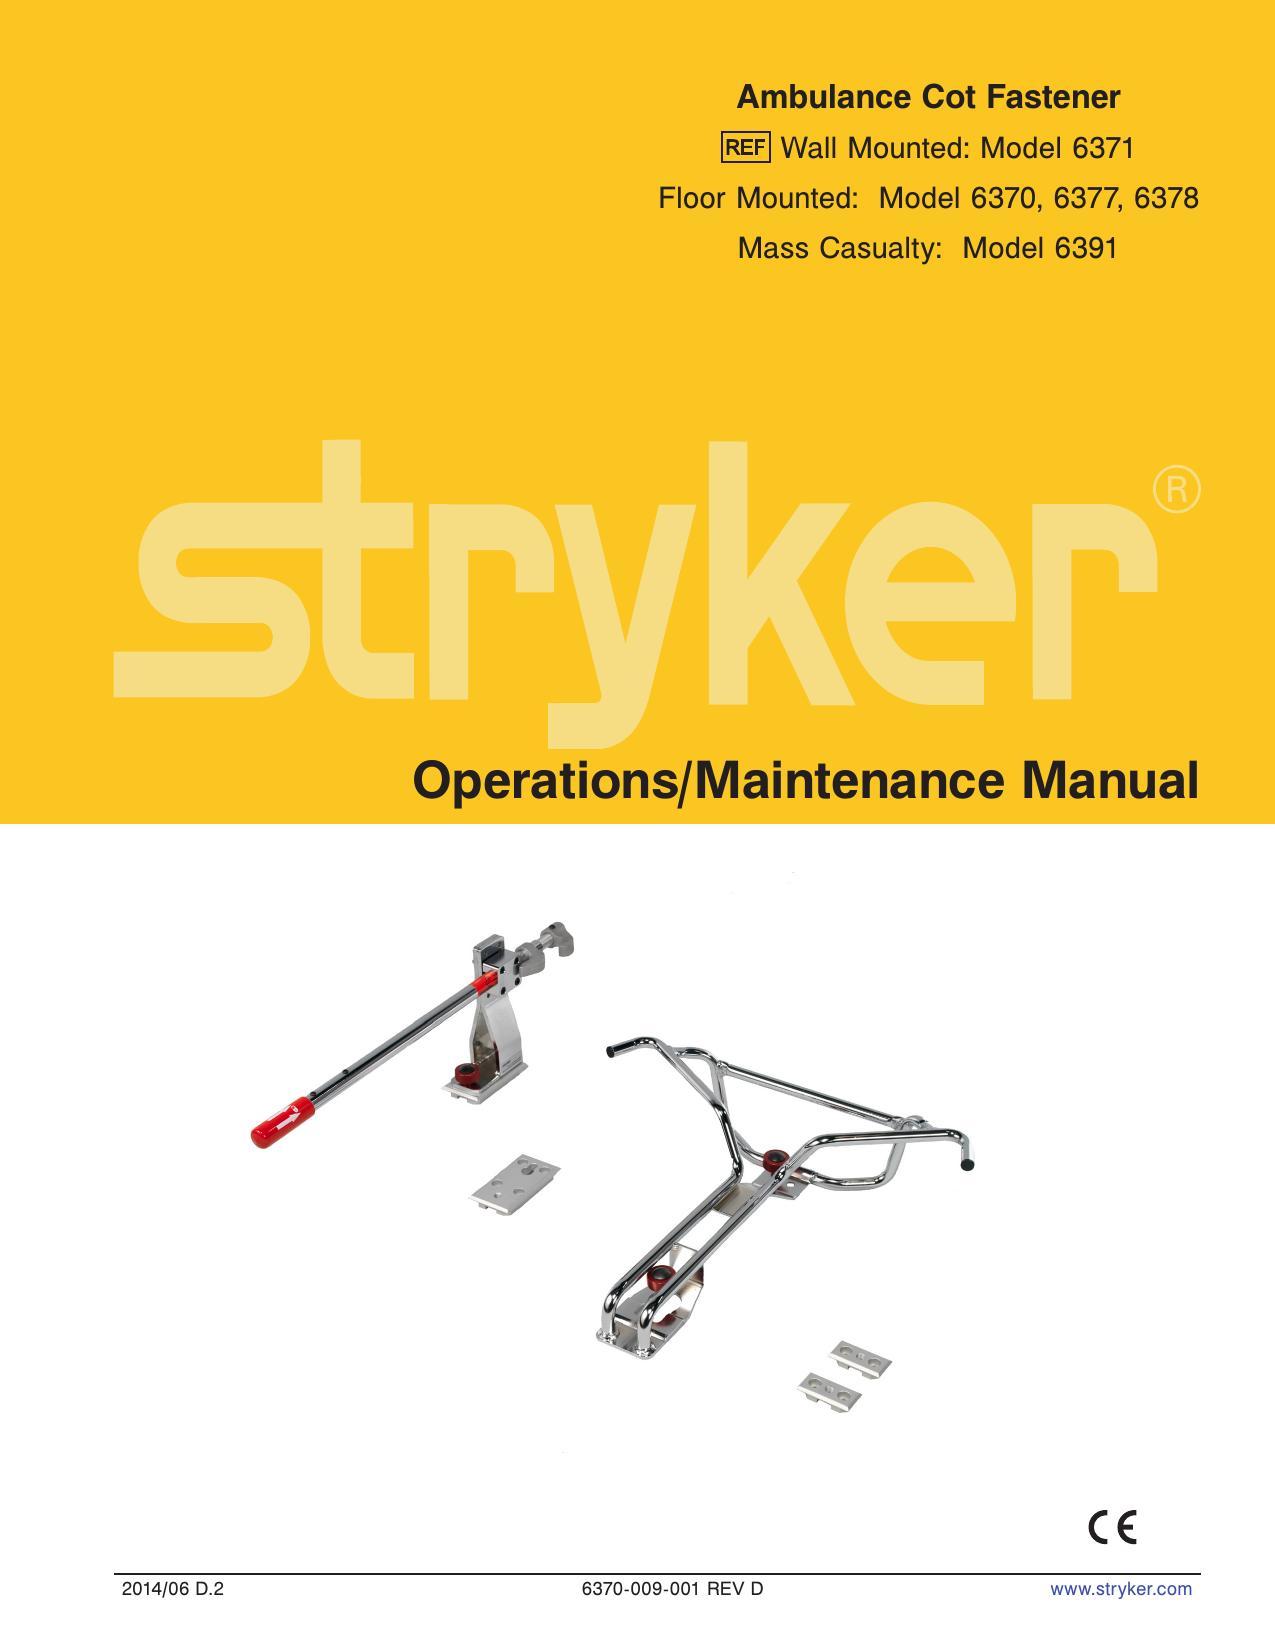 stryker-operations-maintenance-manual-for-ambulance-cot-fasteners-models-6370-6371-6377-6378-6391.pdf